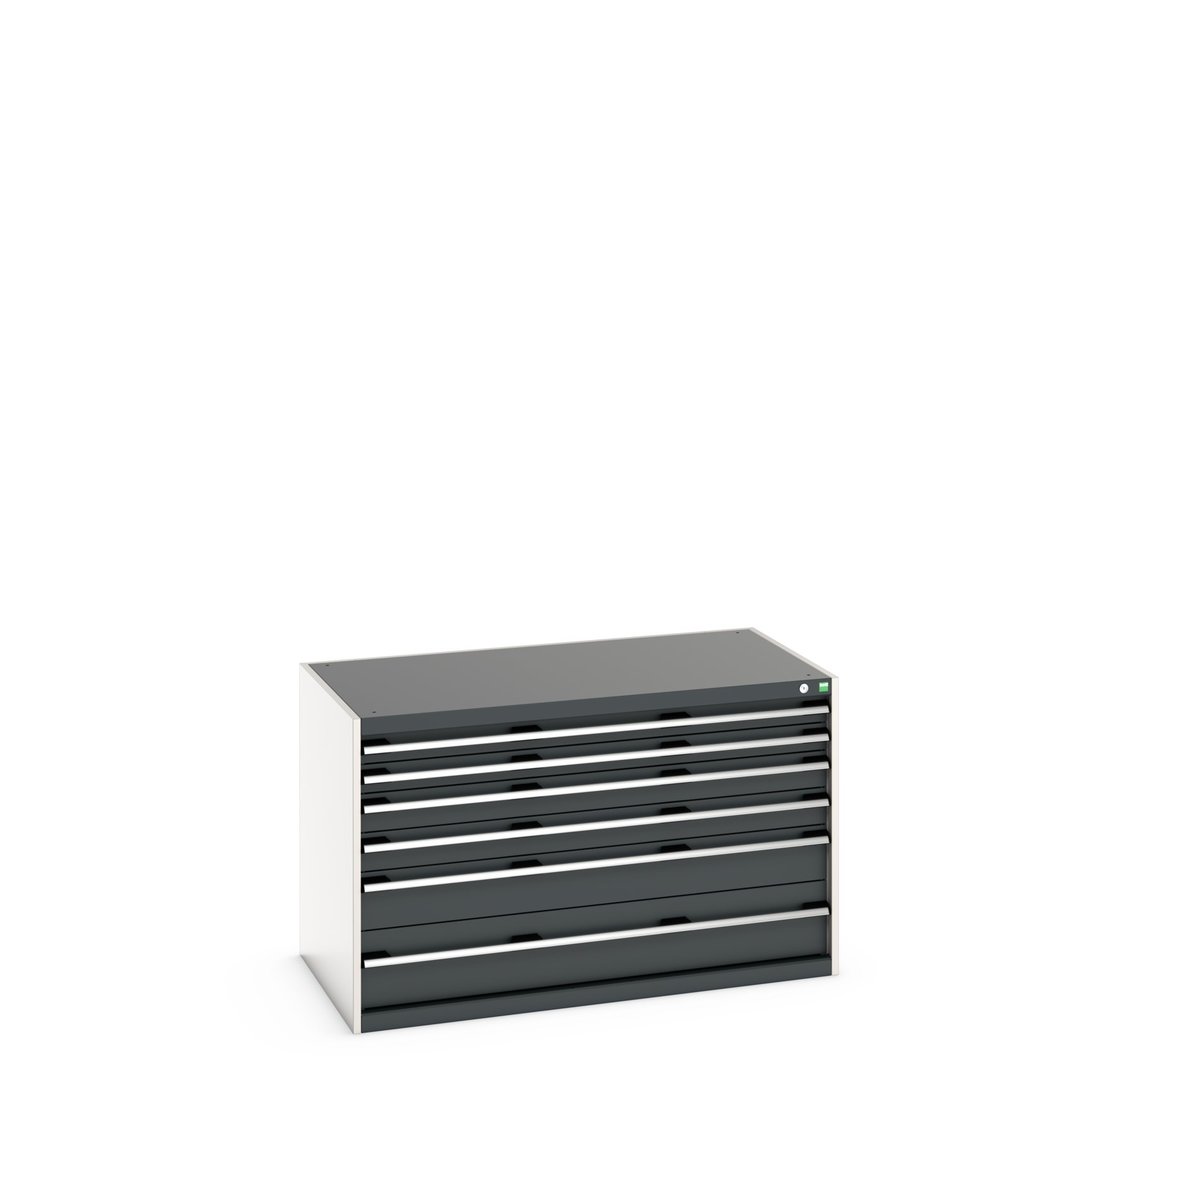 40030072. - cubio drawer cabinet